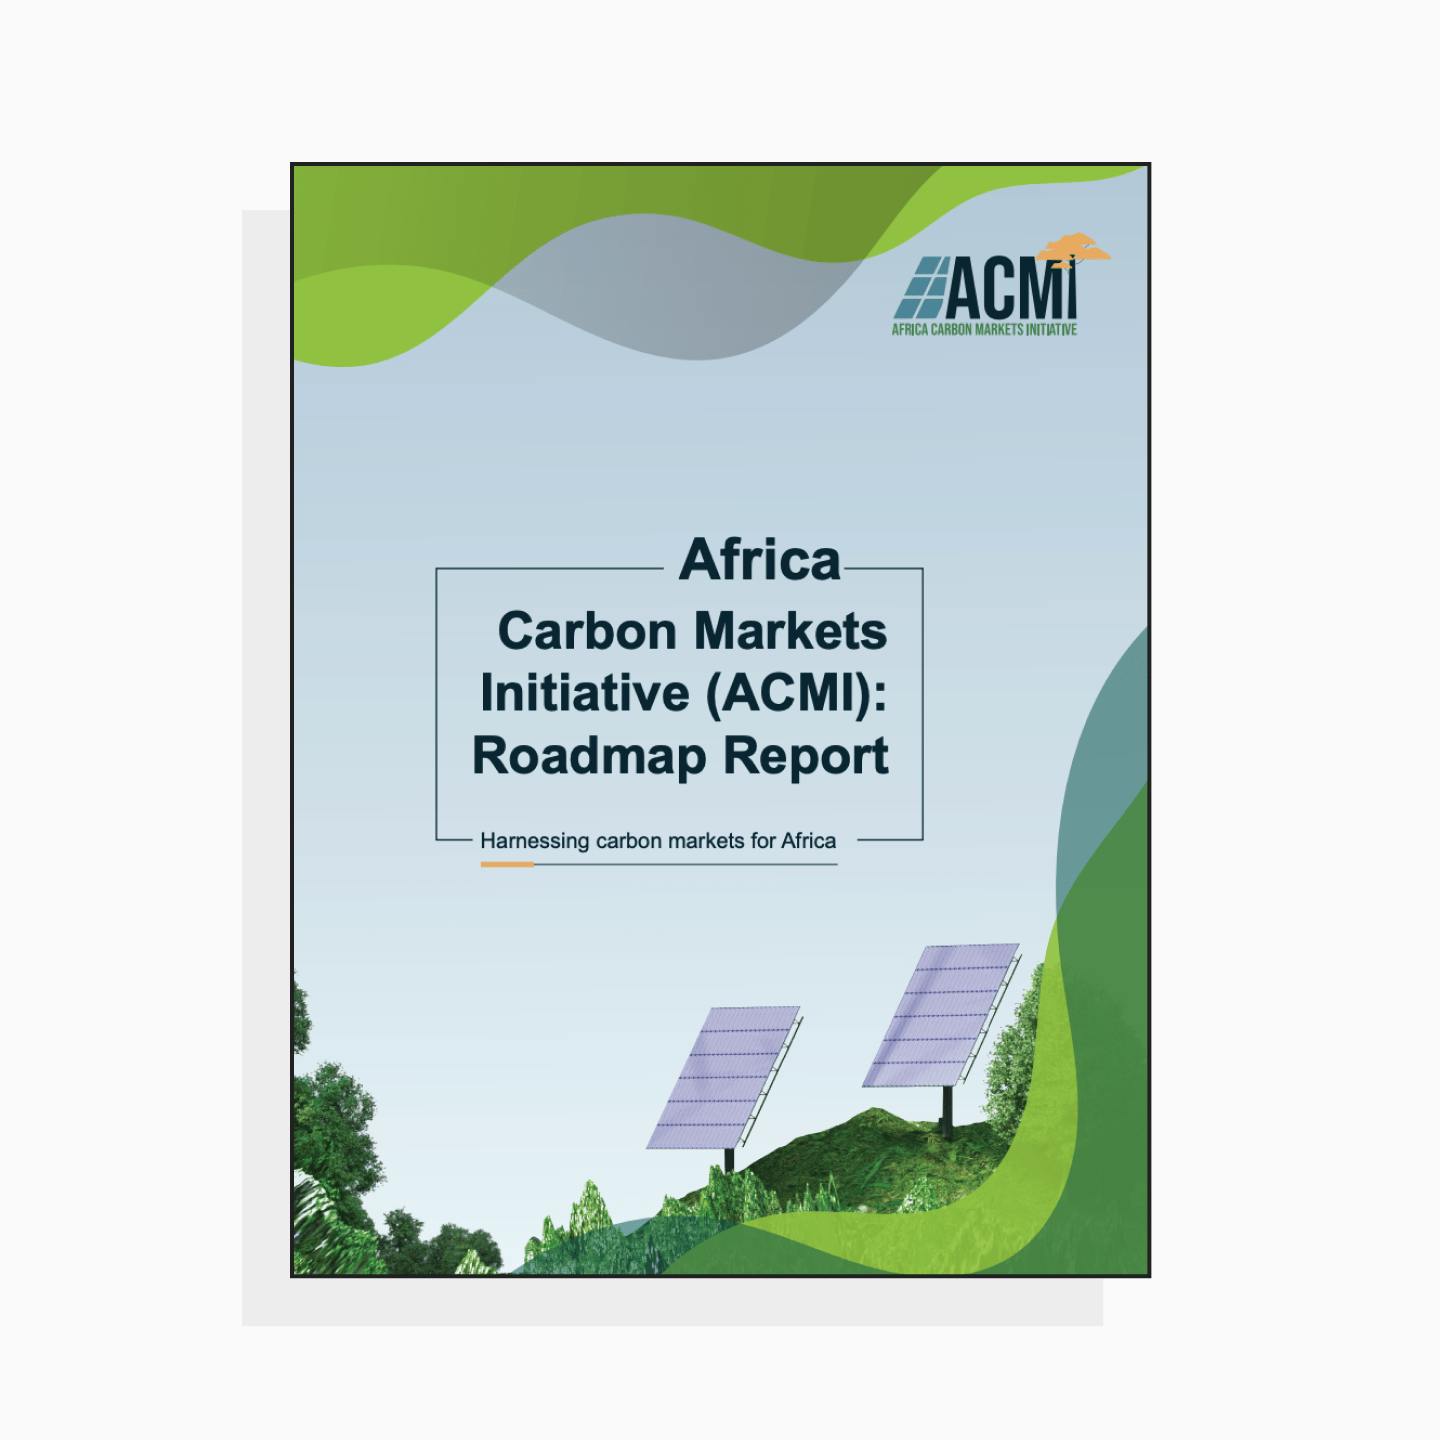 Africa Carbon Markets Initiative (ACMI): Roadmap Report